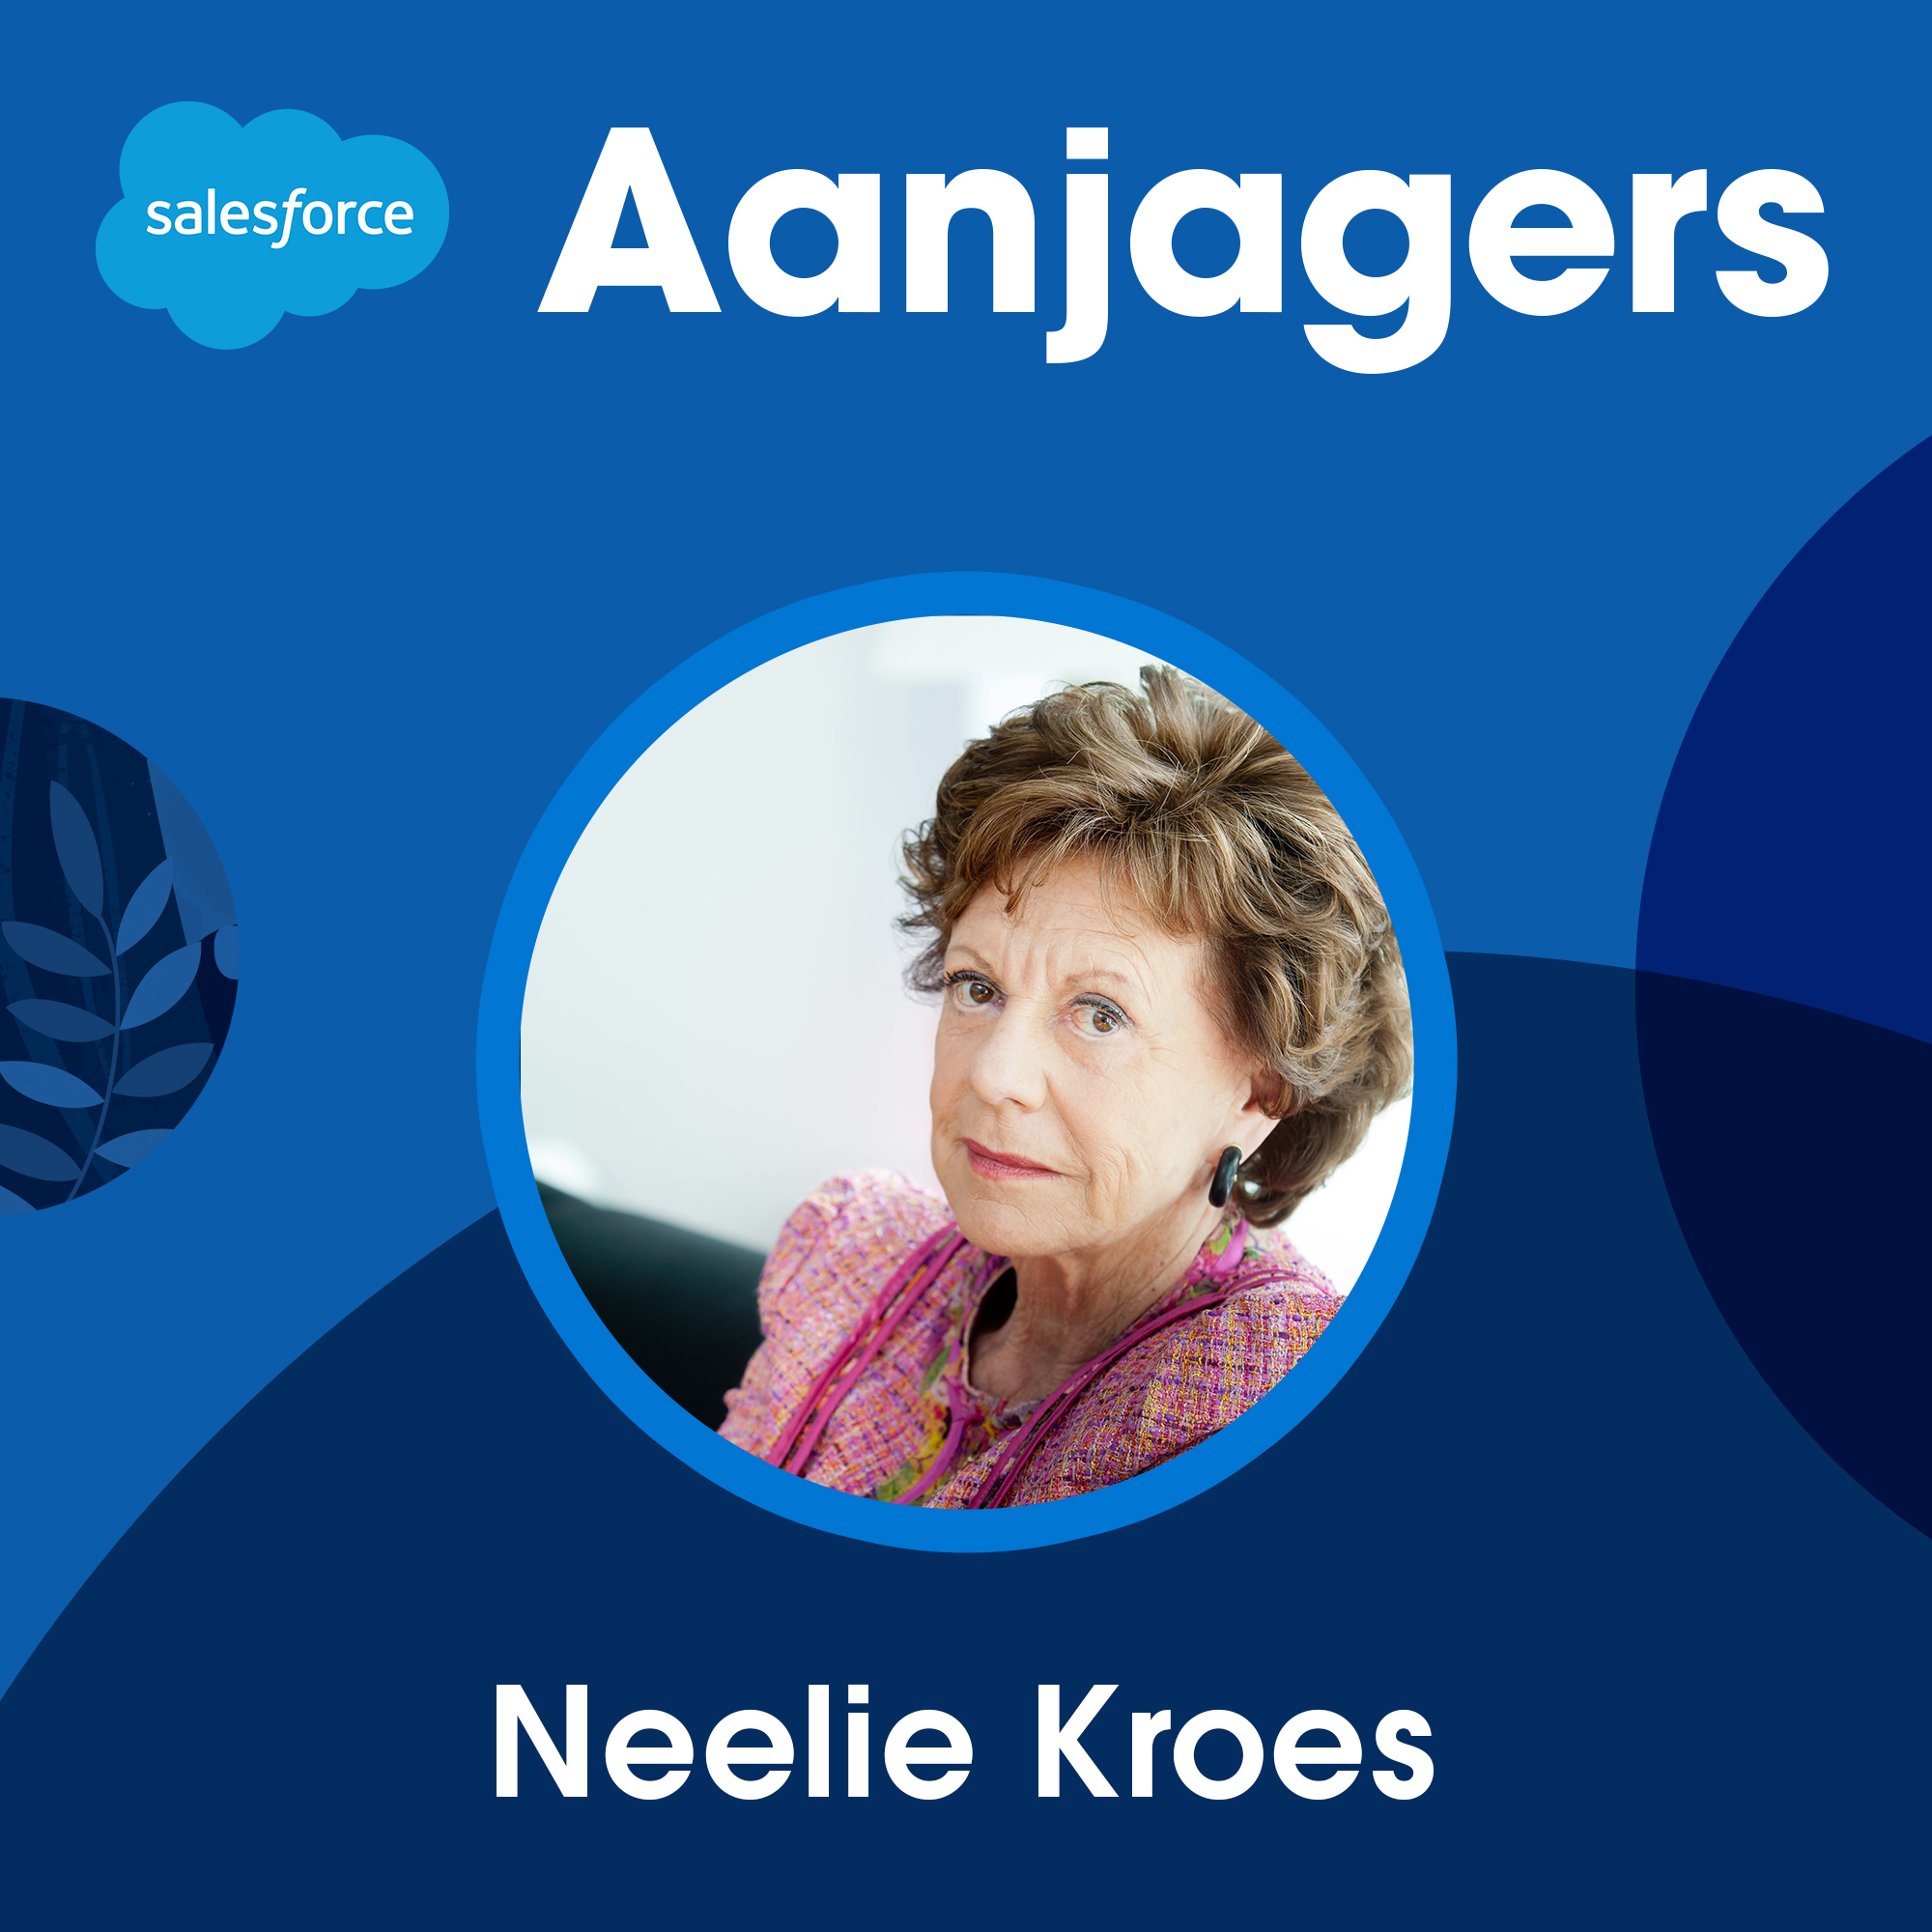 Neelie Kroes: Pak geboden kansen